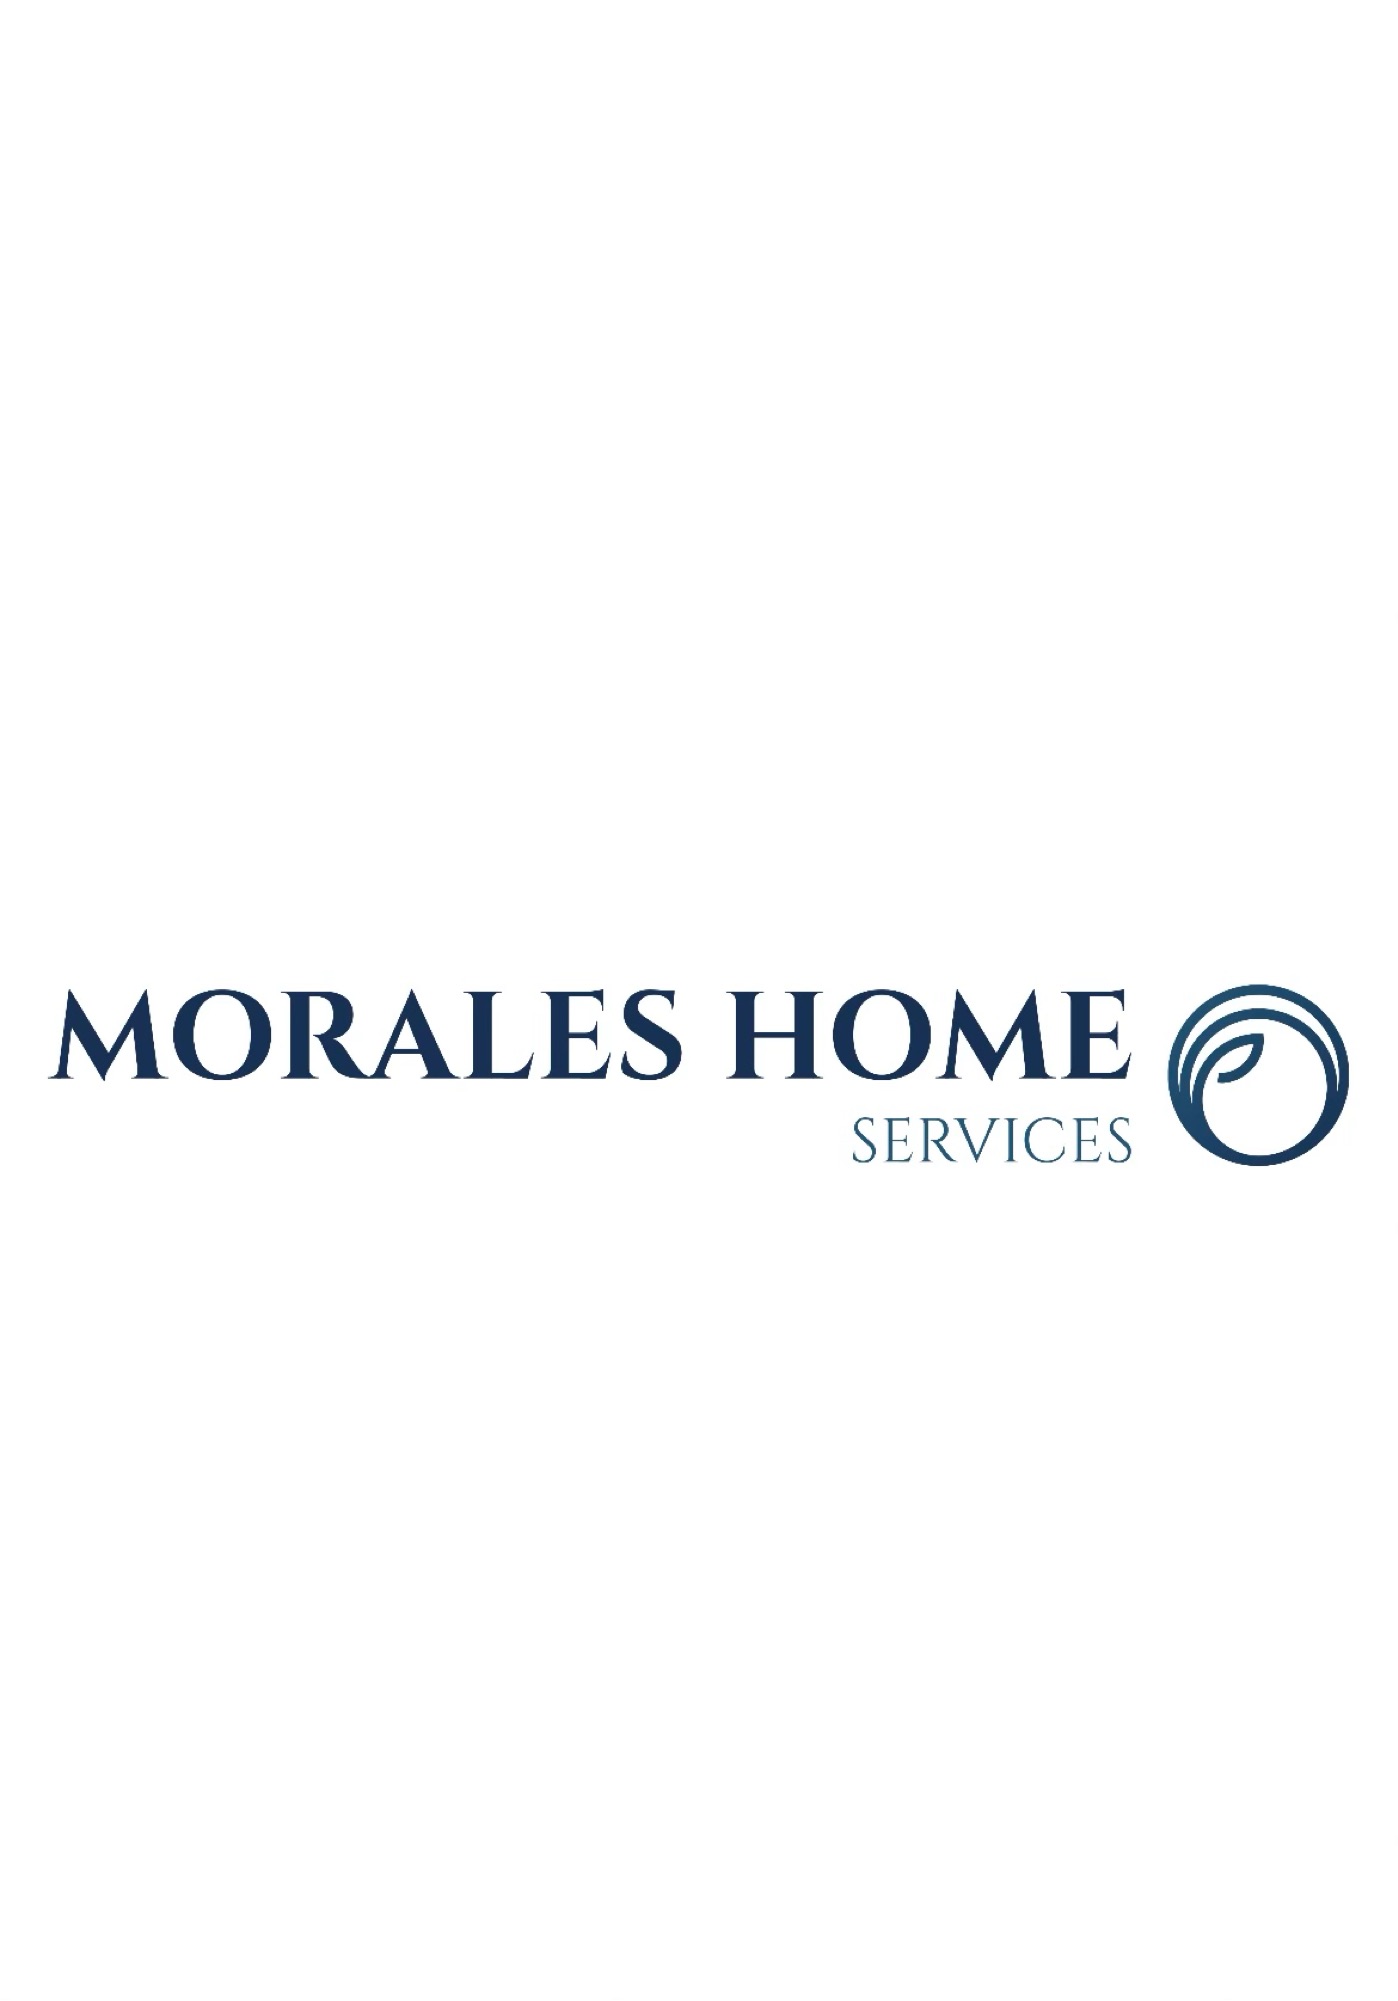 Morales Home Services Logo